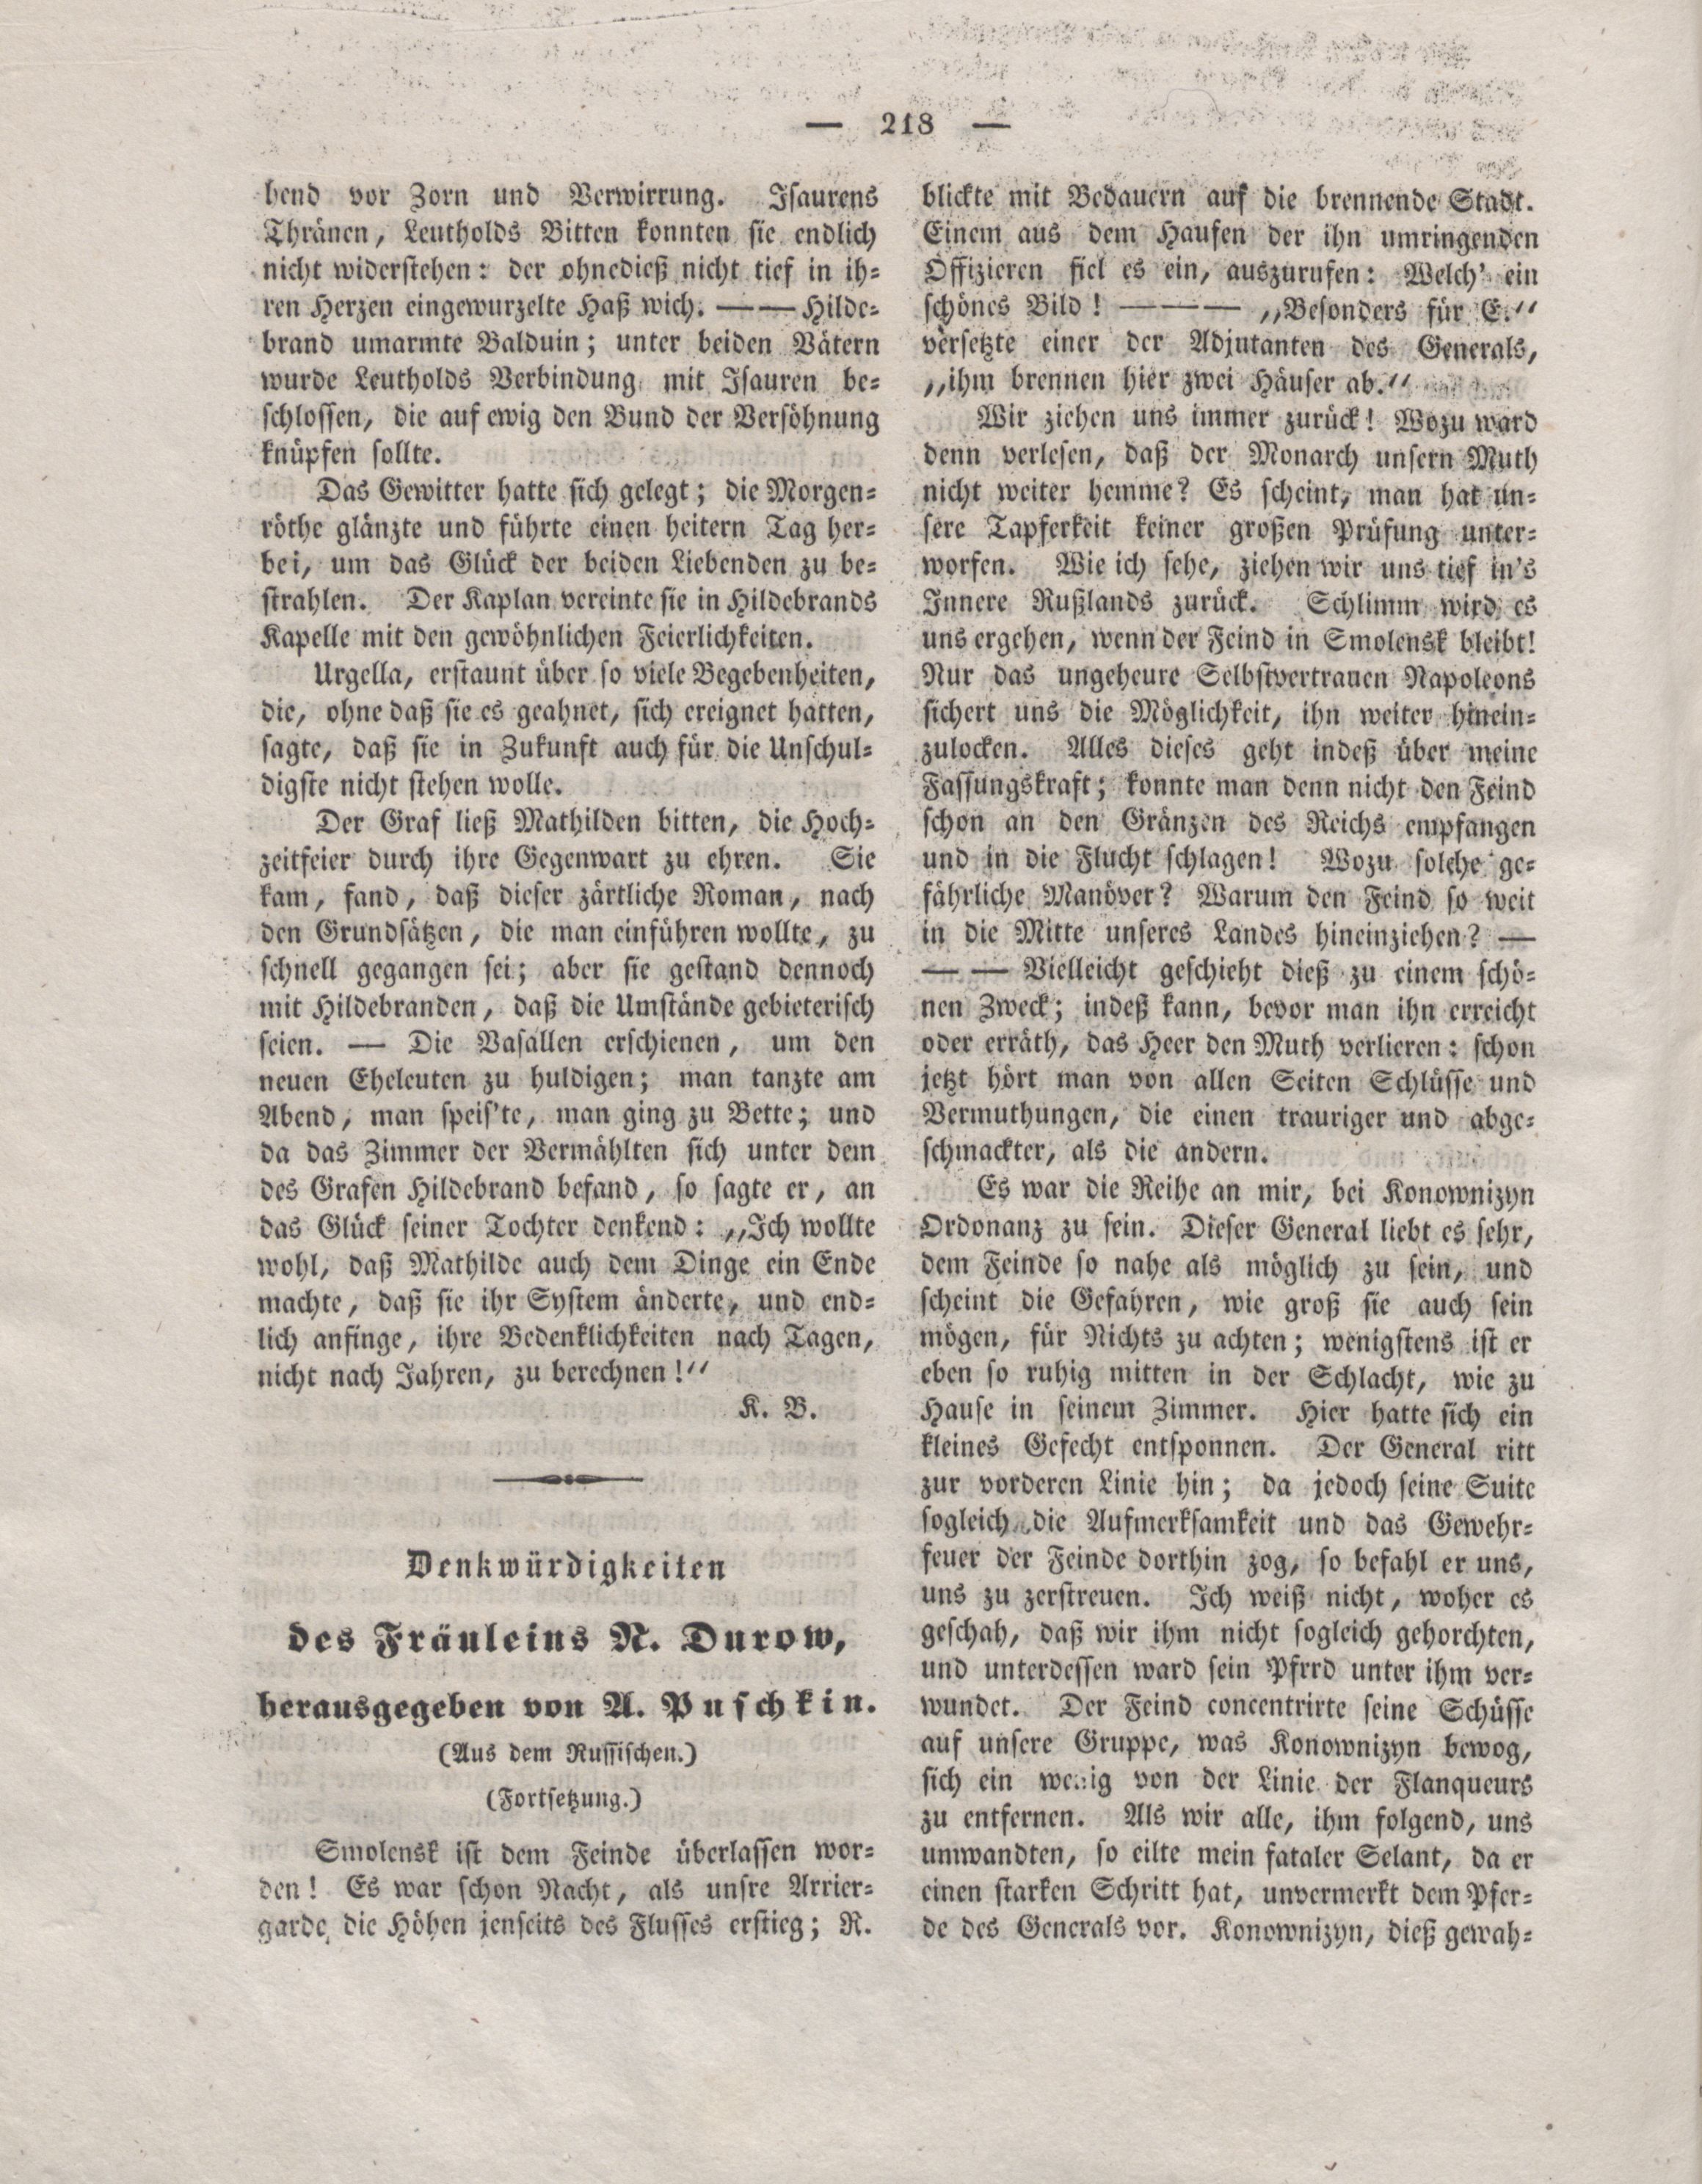 Der Refraktor [1836] (1836) | 219. (218) Main body of text